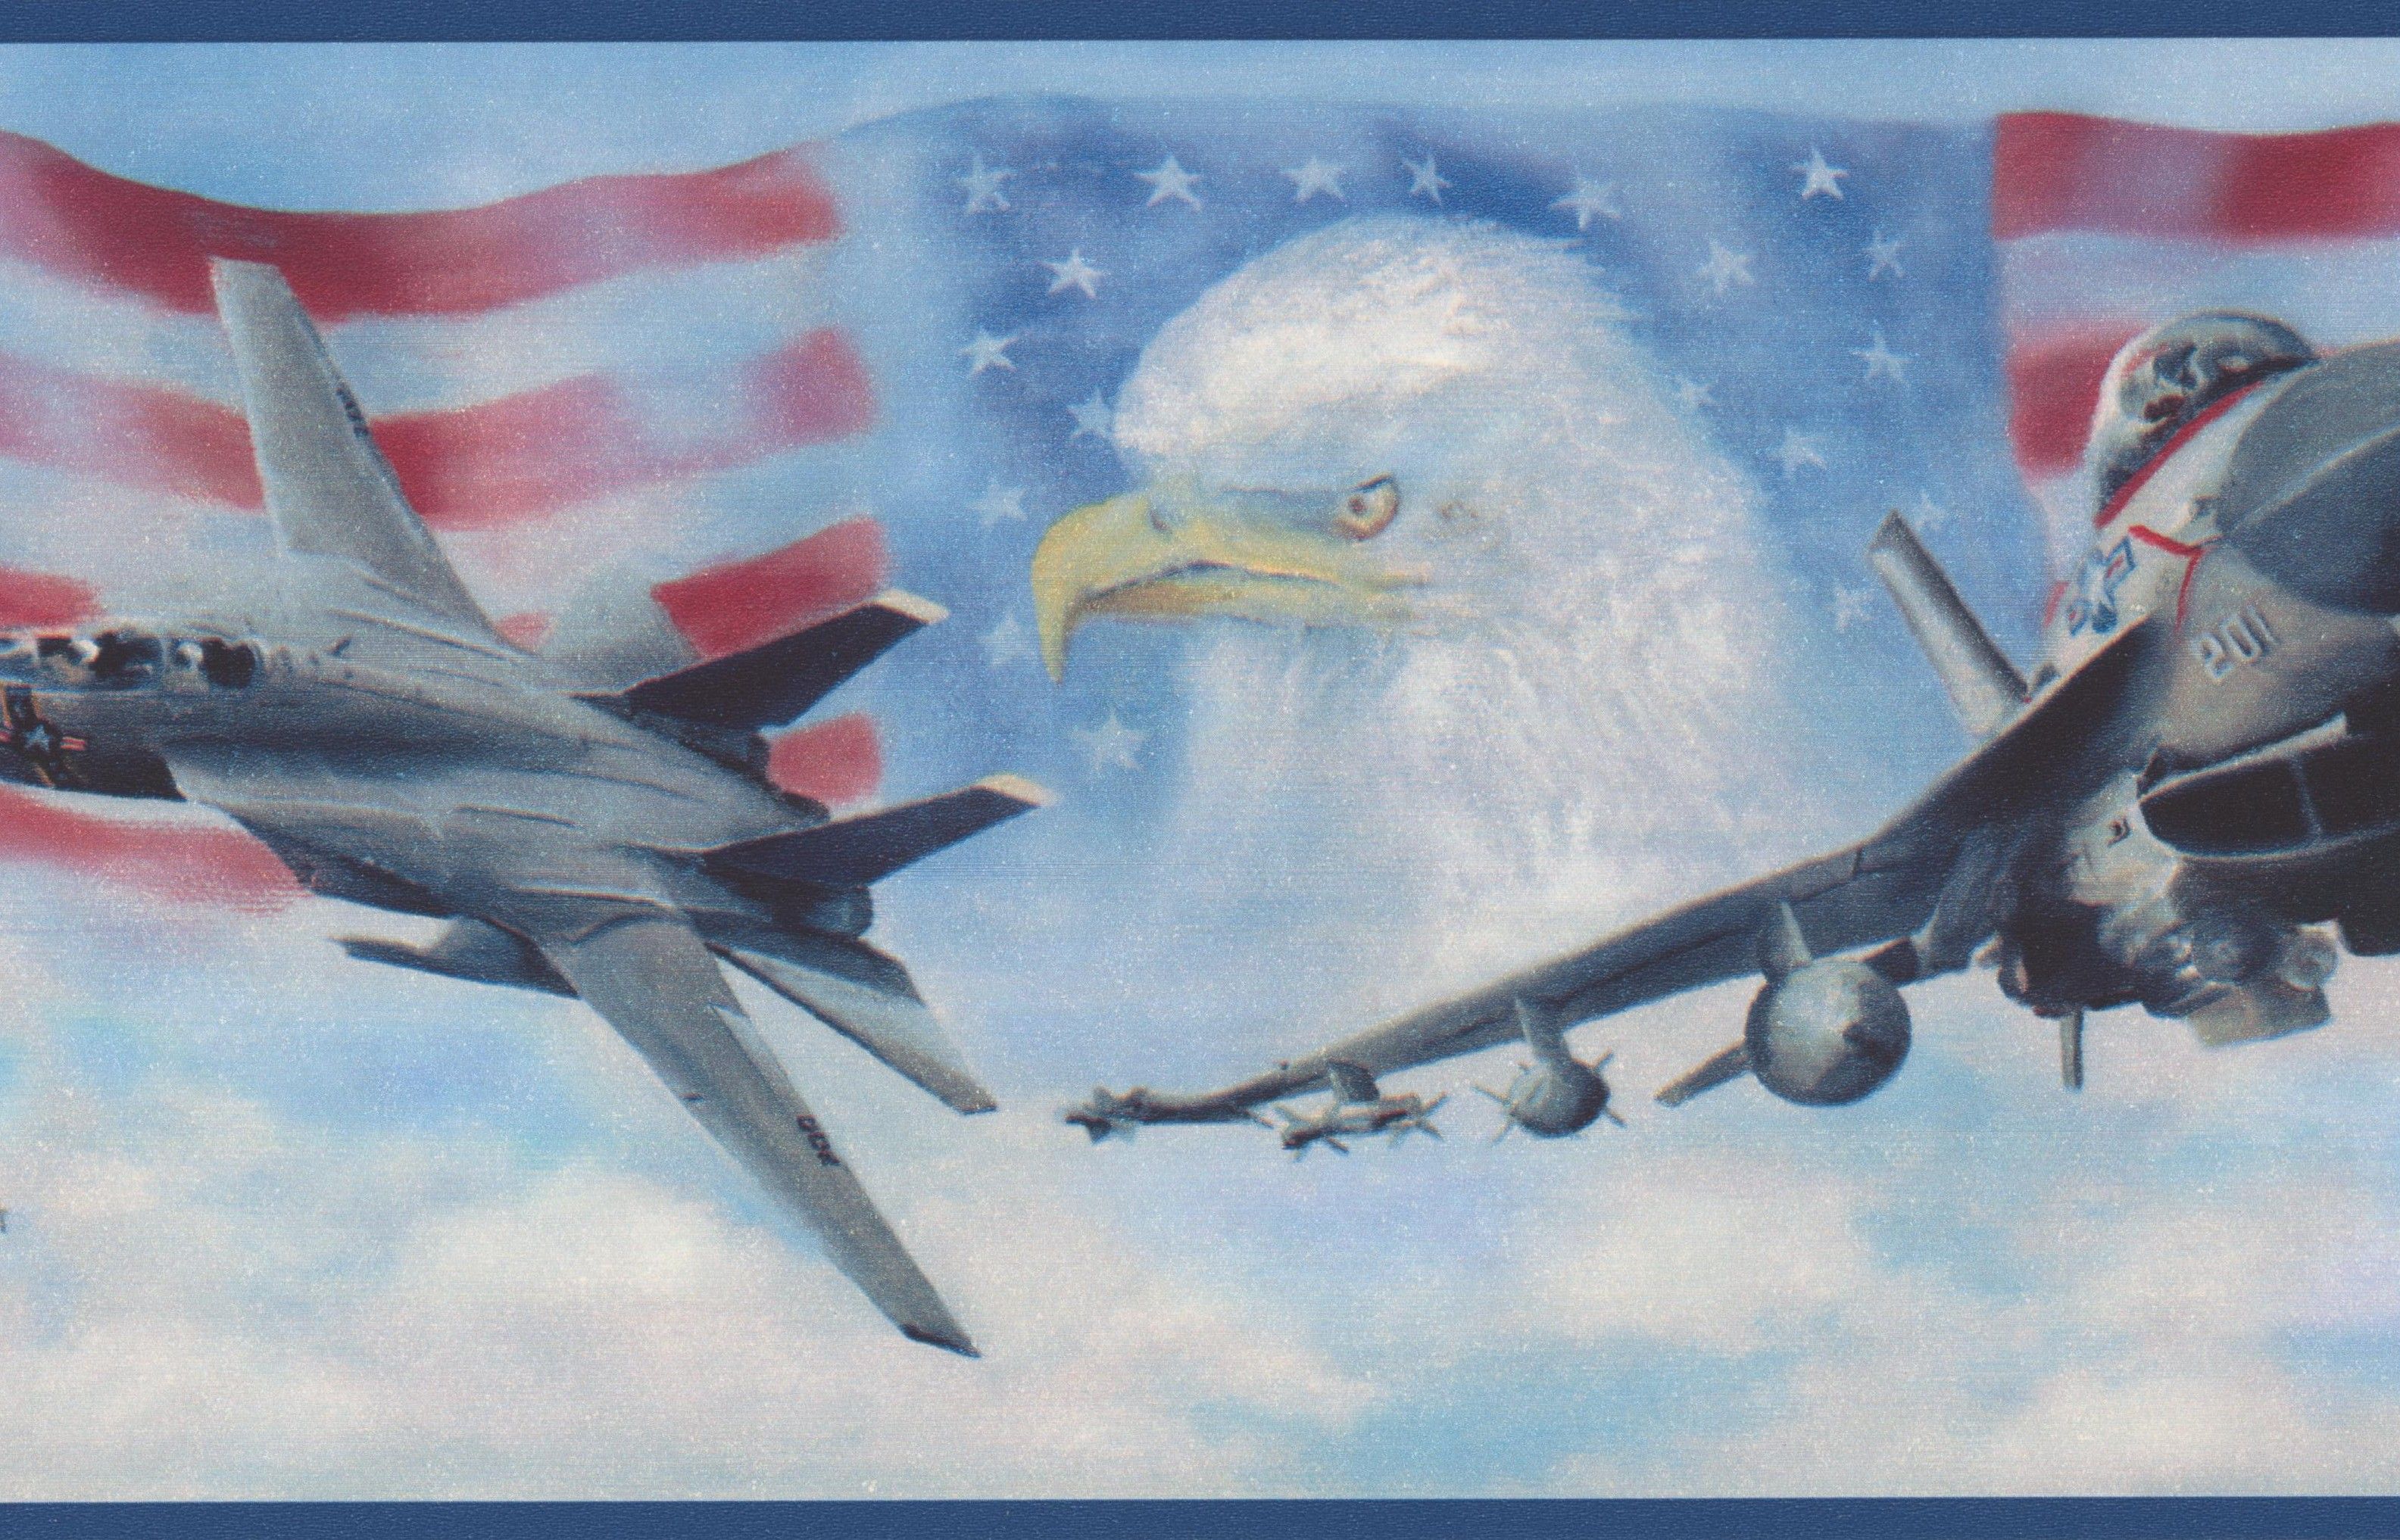 USA Air Force Jet Fighters American Flag Bald Eagle Patriotic Wallpaper Border Retro Design, Roll 15' x 7''